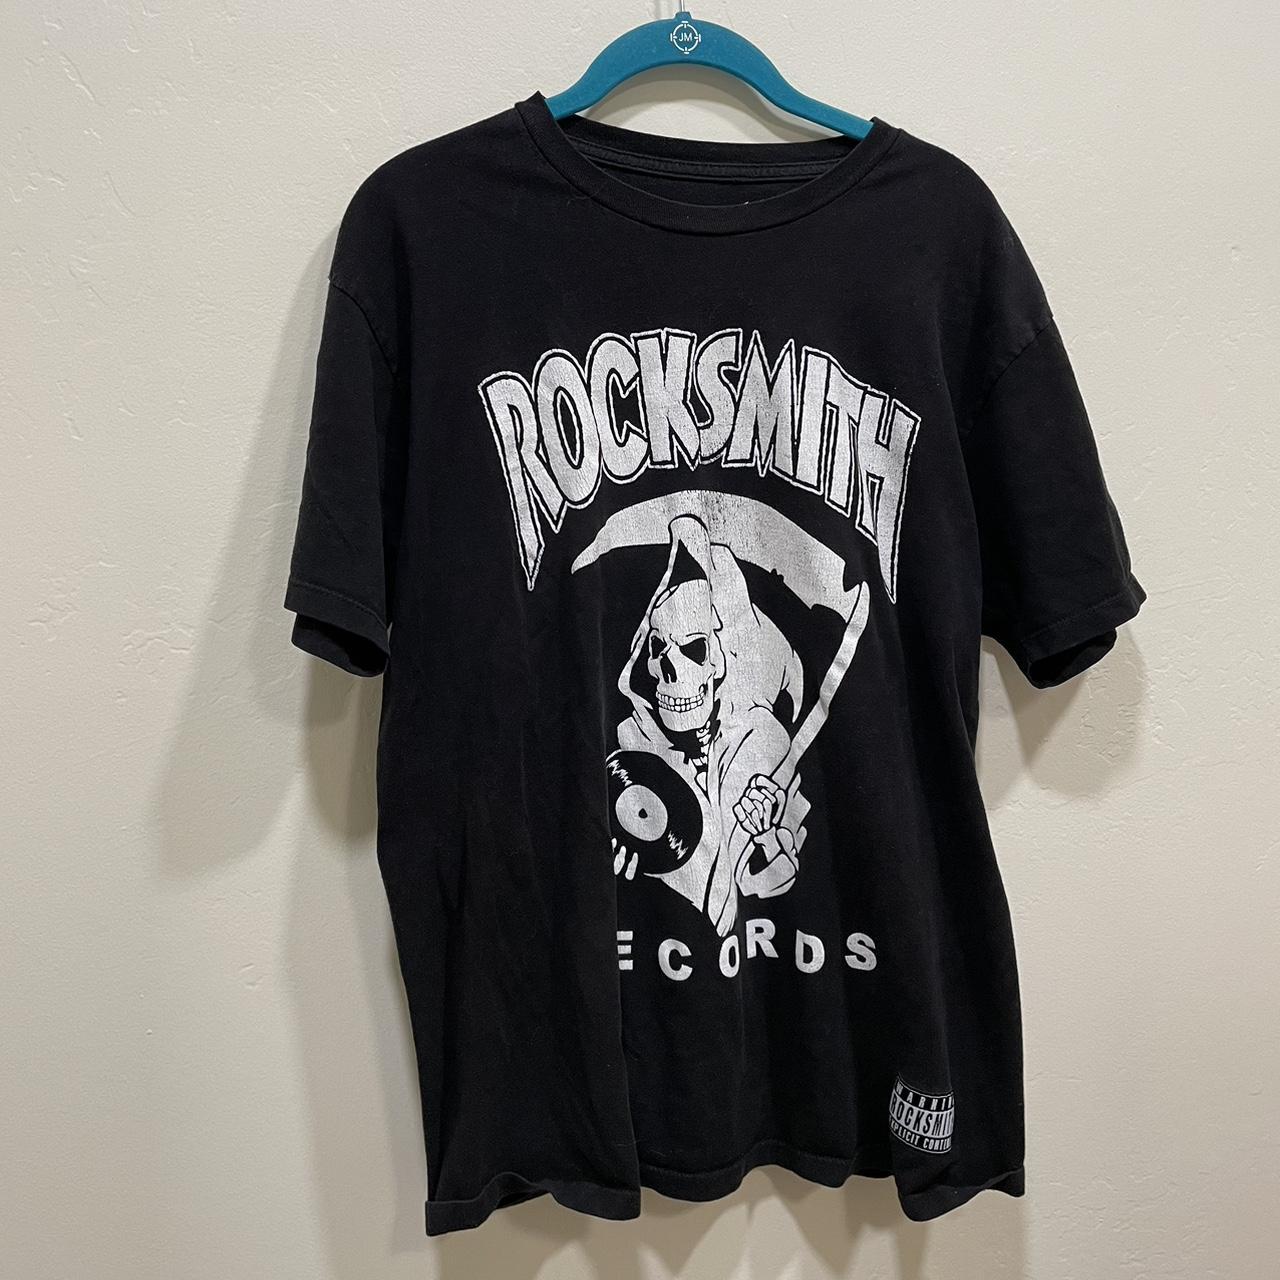 RockSmith, Shirts